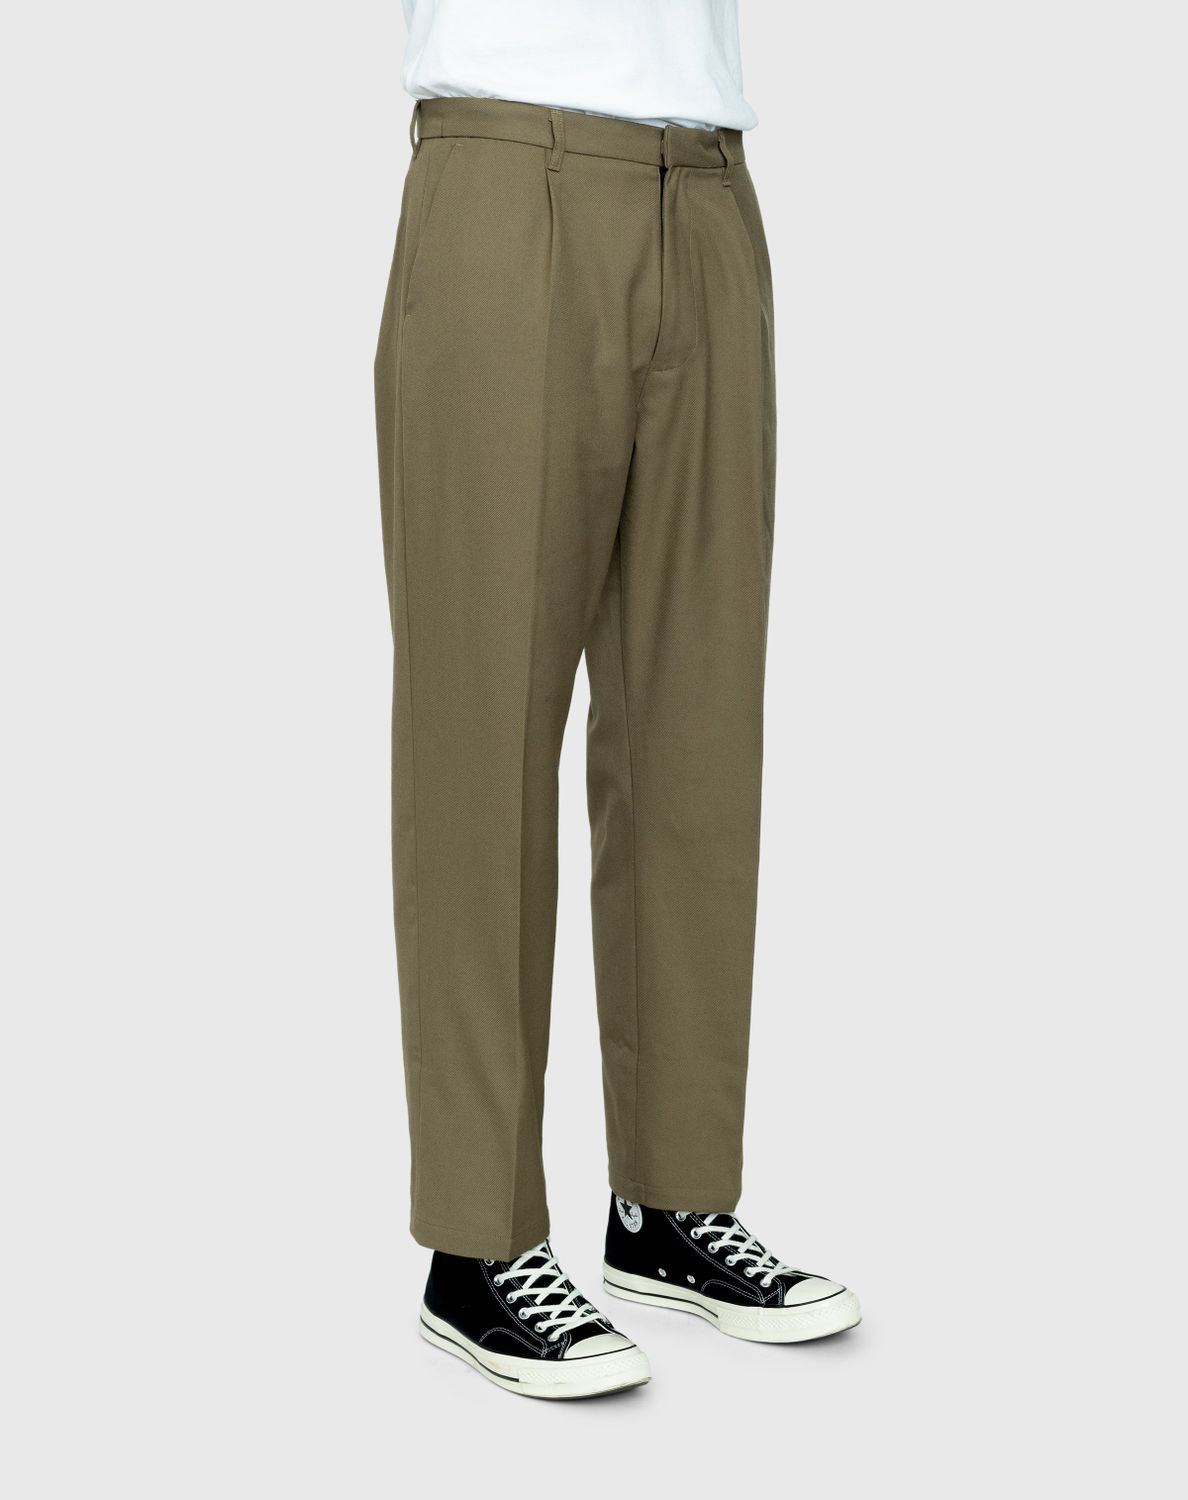 Highsnobiety – Heavy Wool Dress Pants Light Brown - Trousers - Brown - Image 4